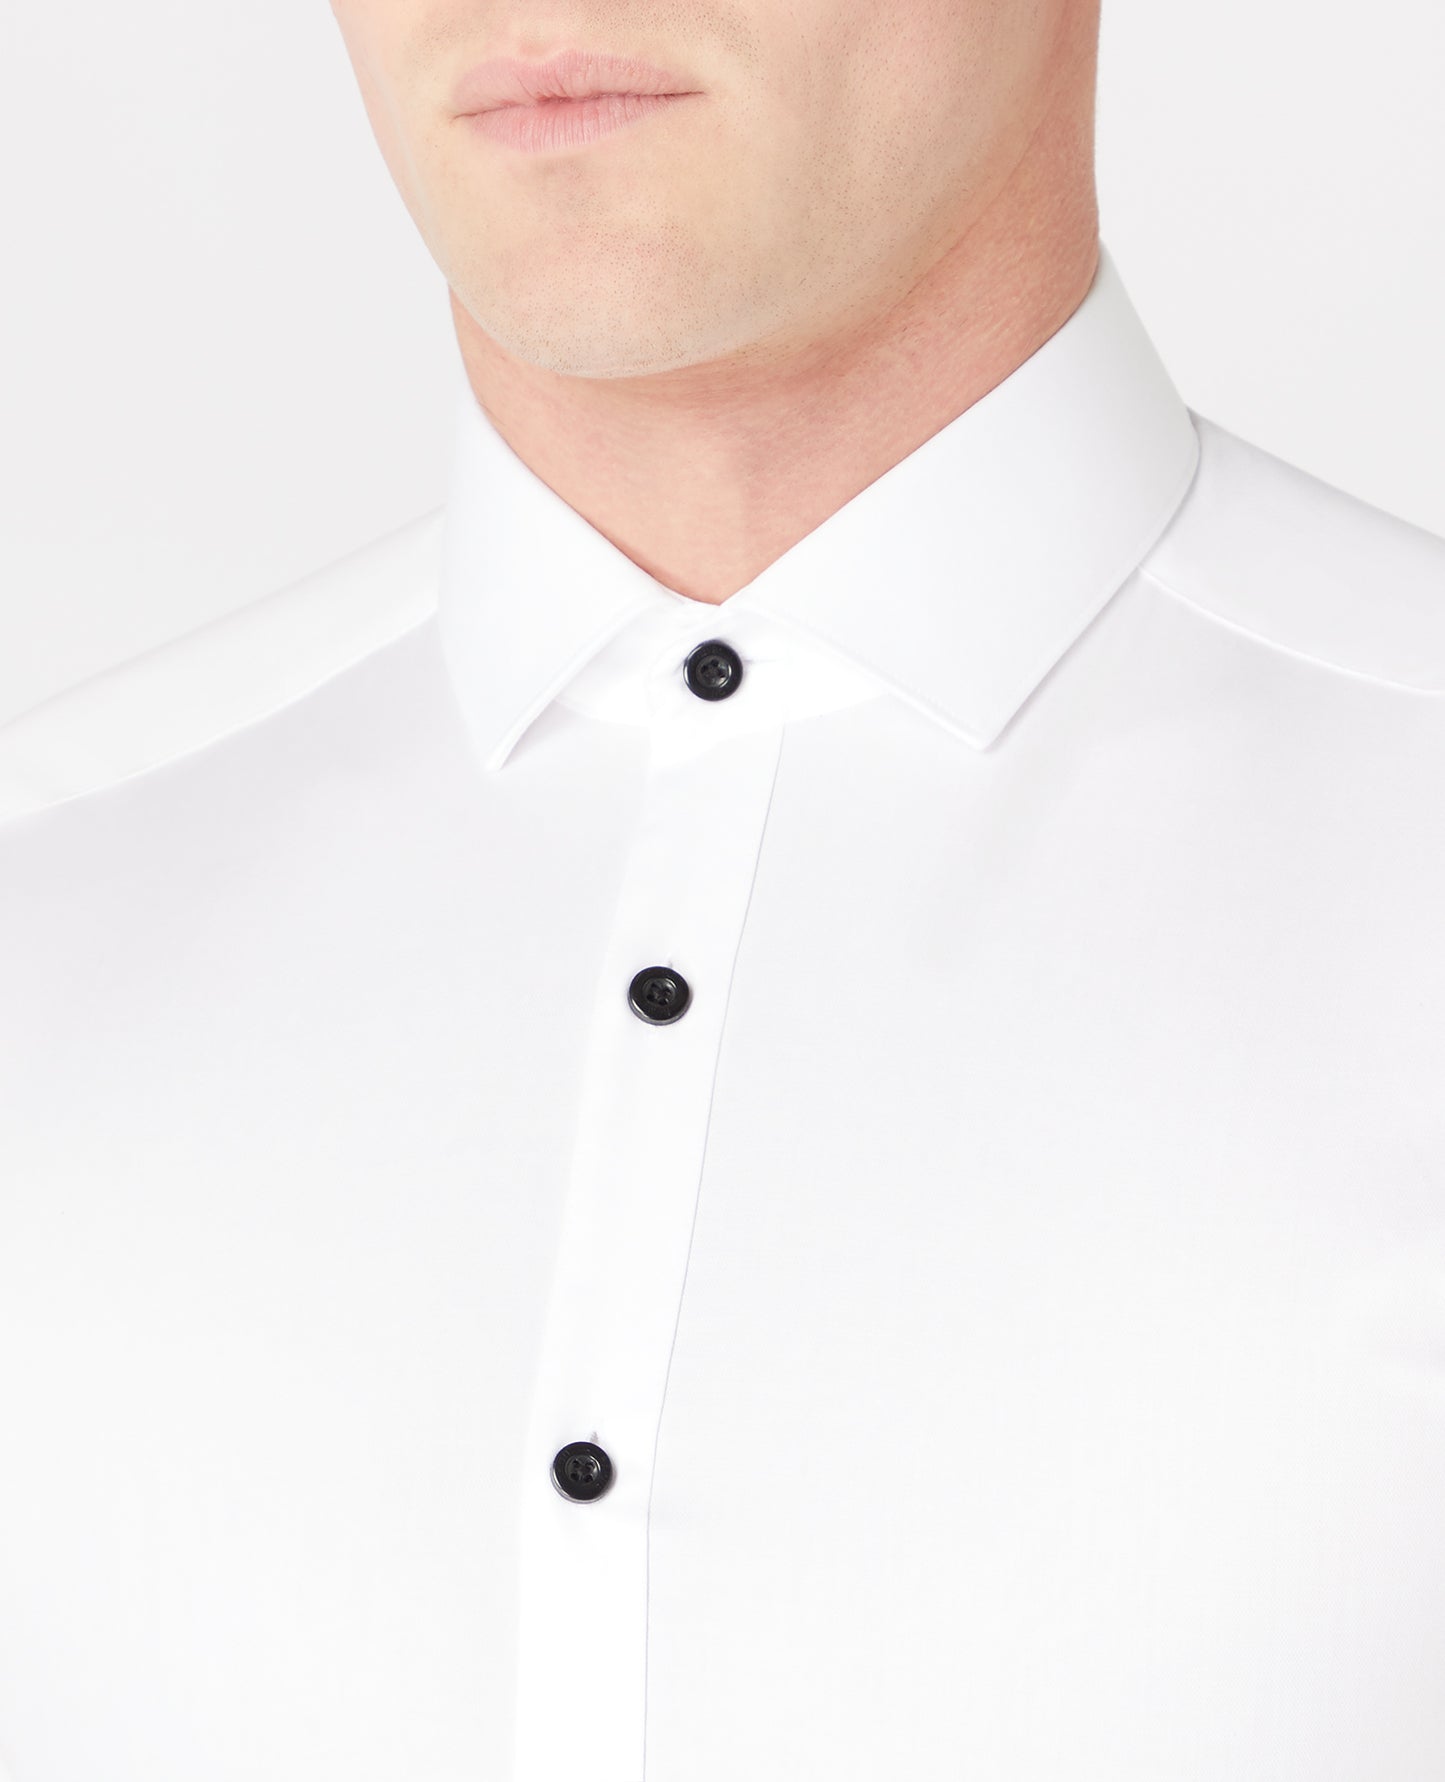 Remus Uomo 18802 01 White Rome Slim Fit Dress Shirt